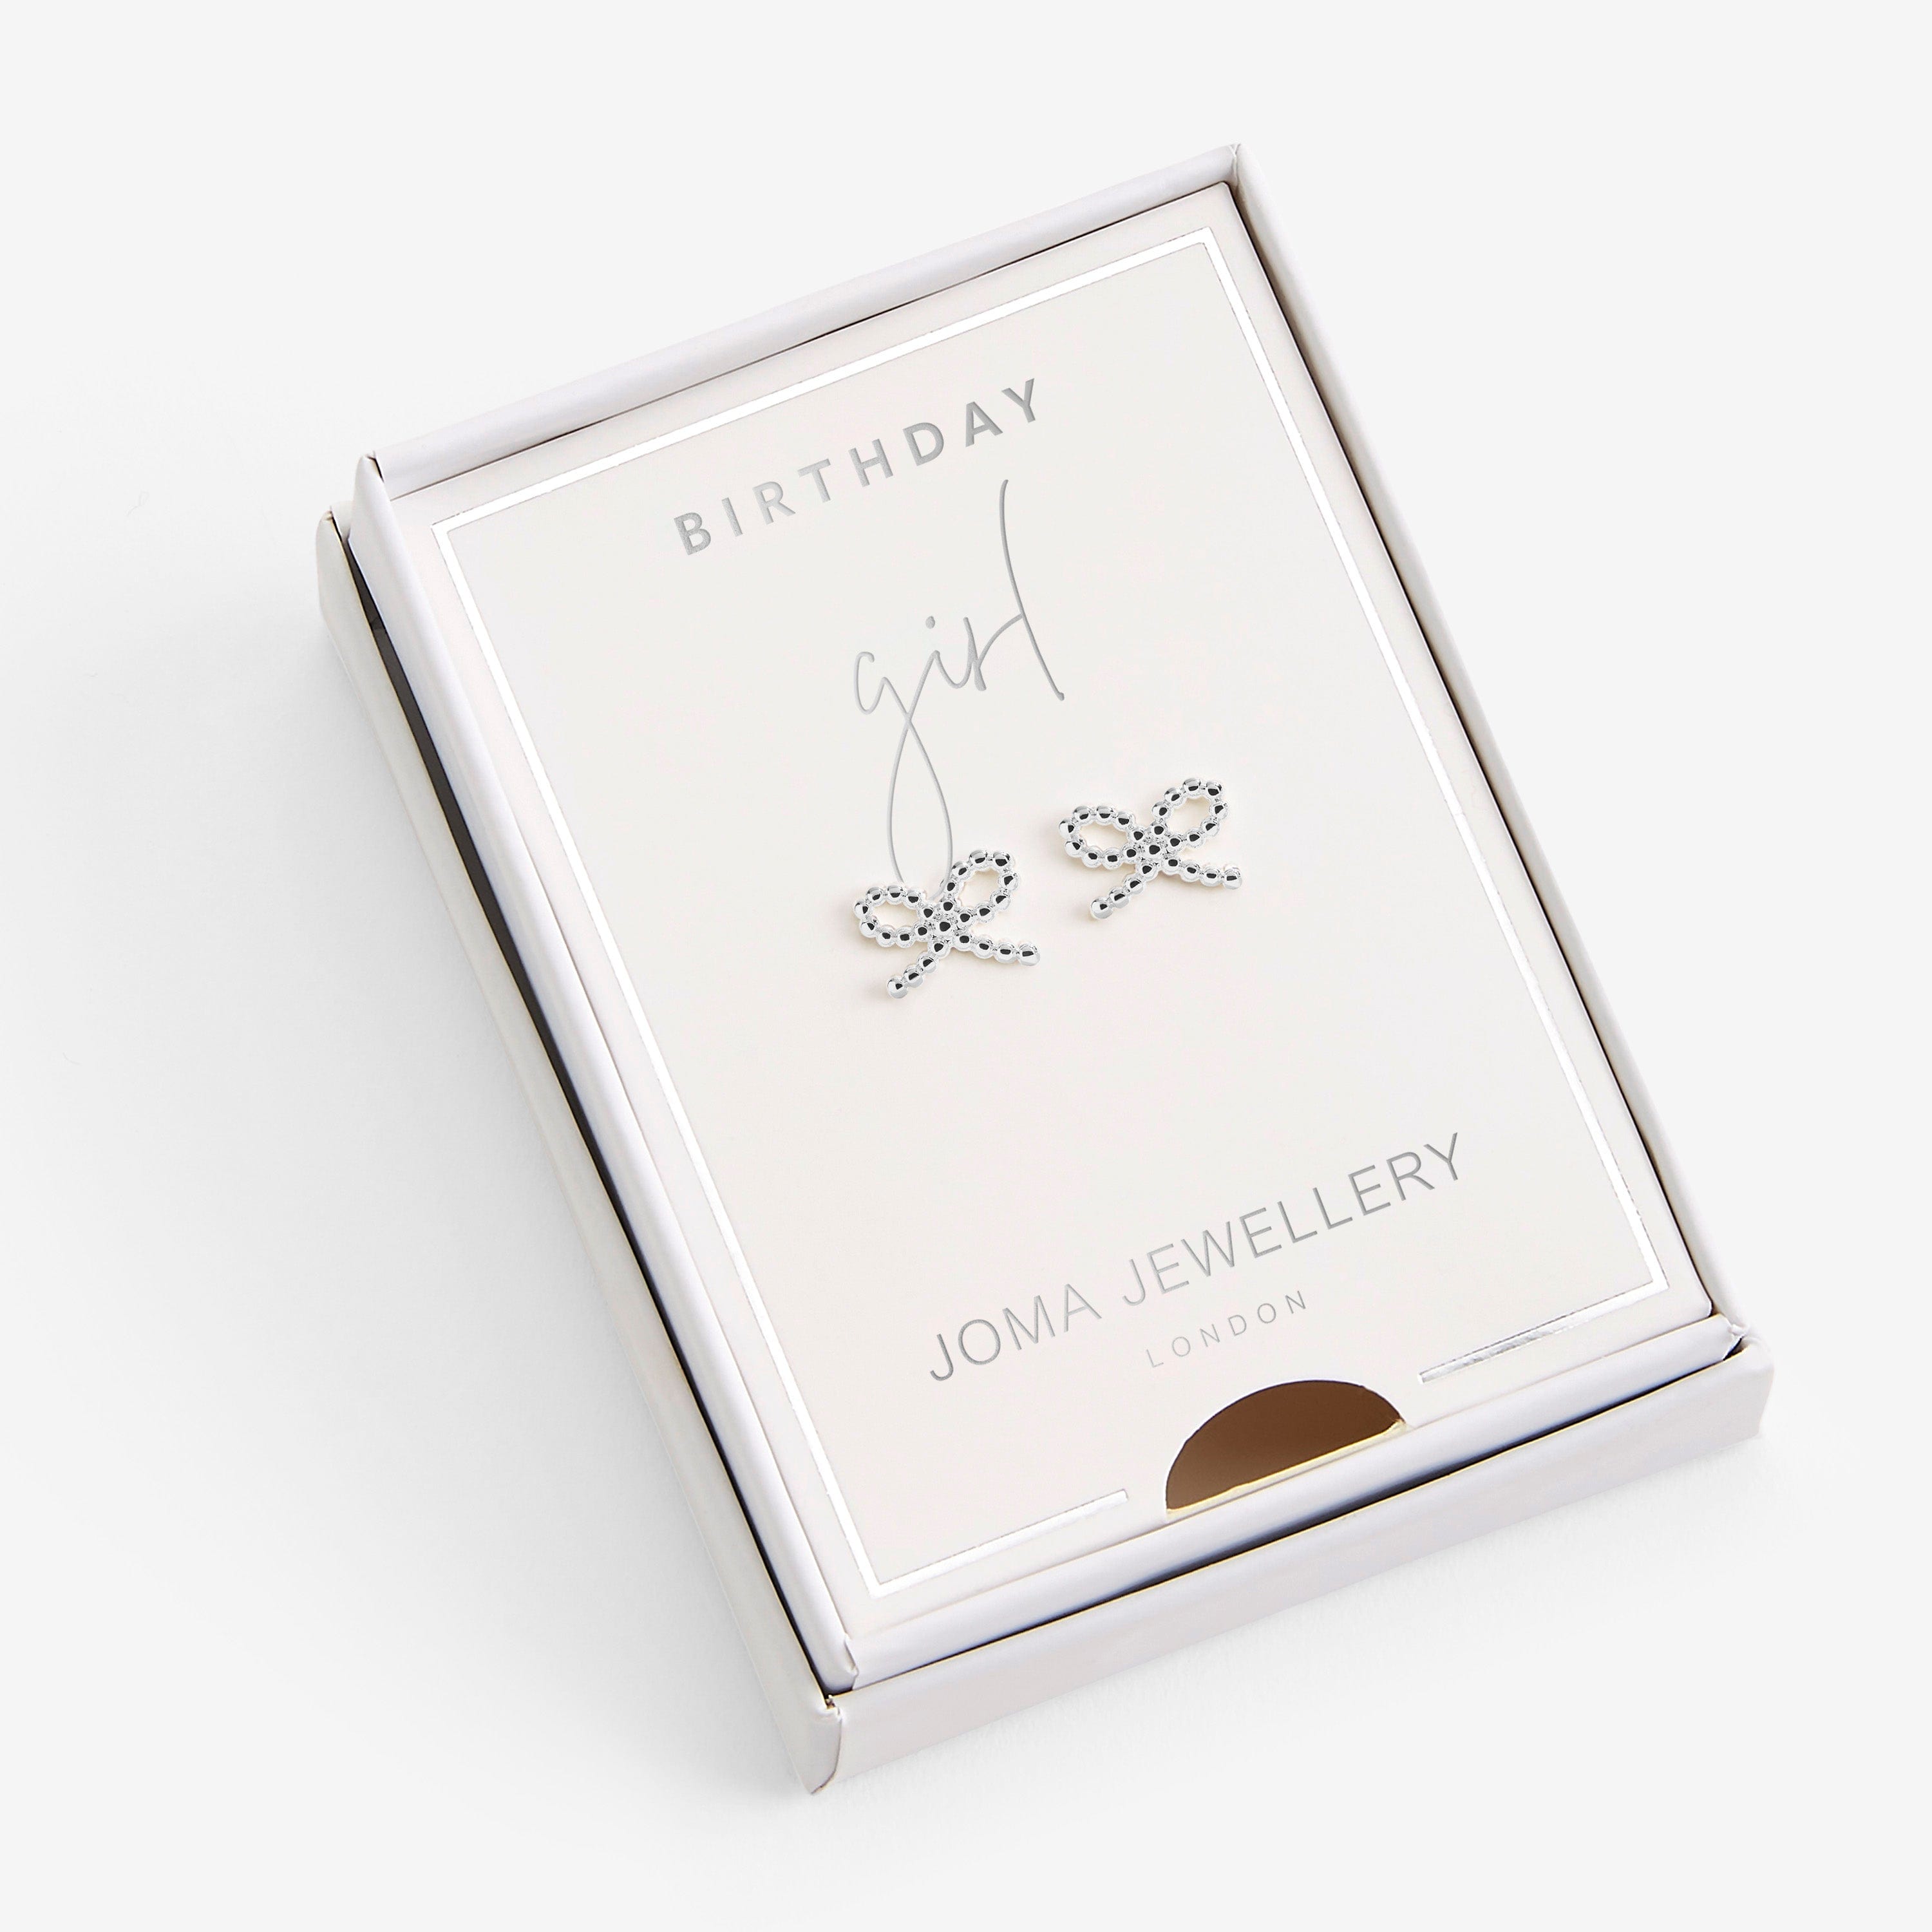 Joma Jewellery Earrings Joma Jewellery Treasure The Little Things - Birthday Girl Boxed Earrings